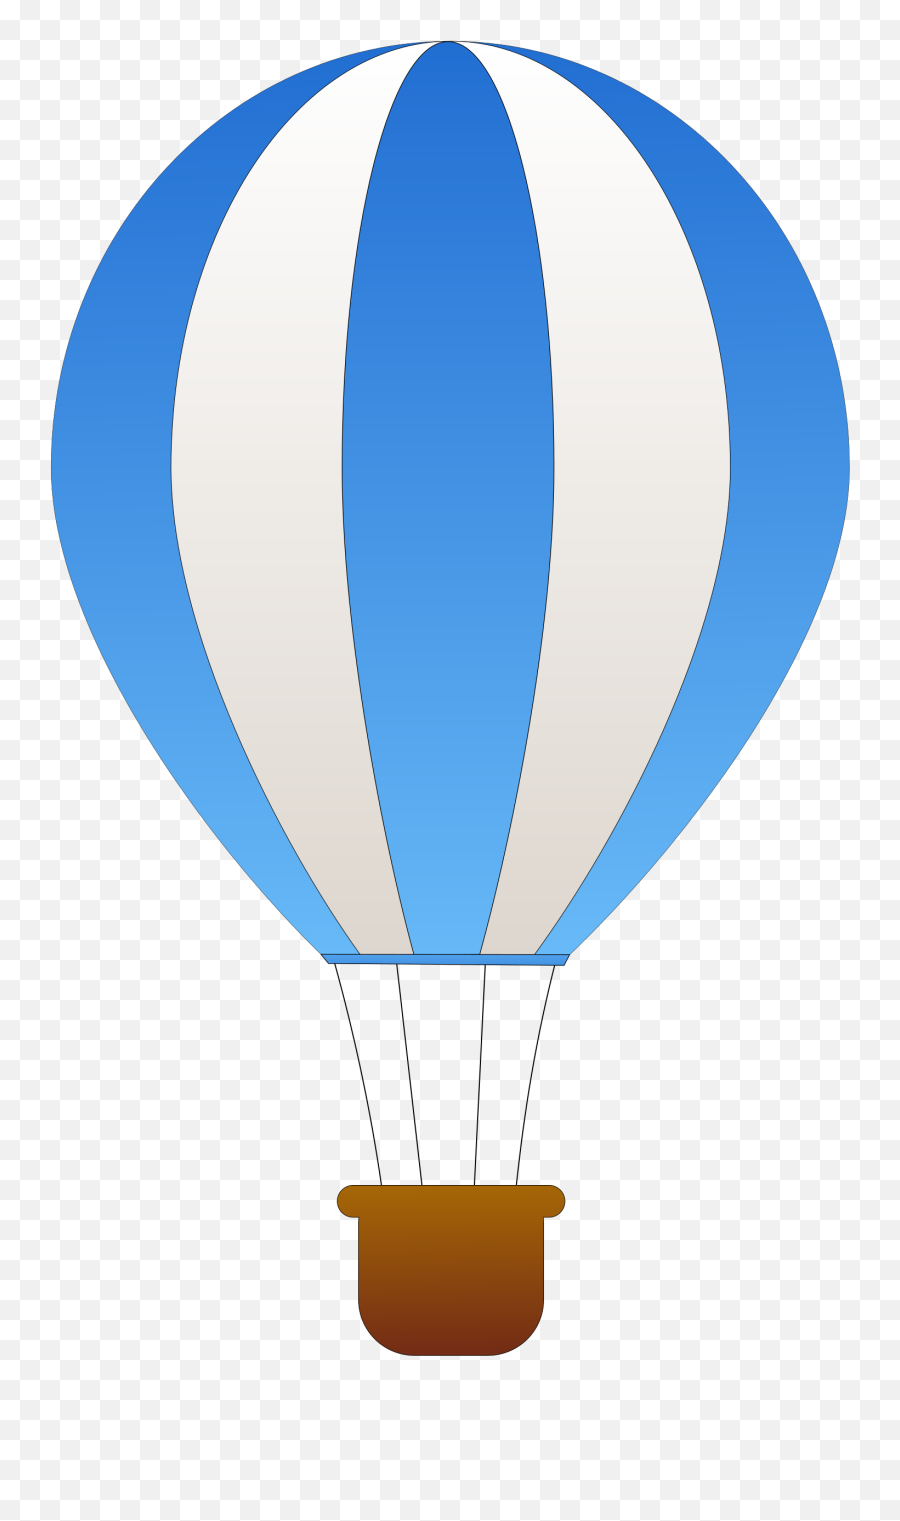 Download Free Clipart Hot Air Balloons - Hot Air Balloon Clip Art Png,Hot Air Balloon Transparent